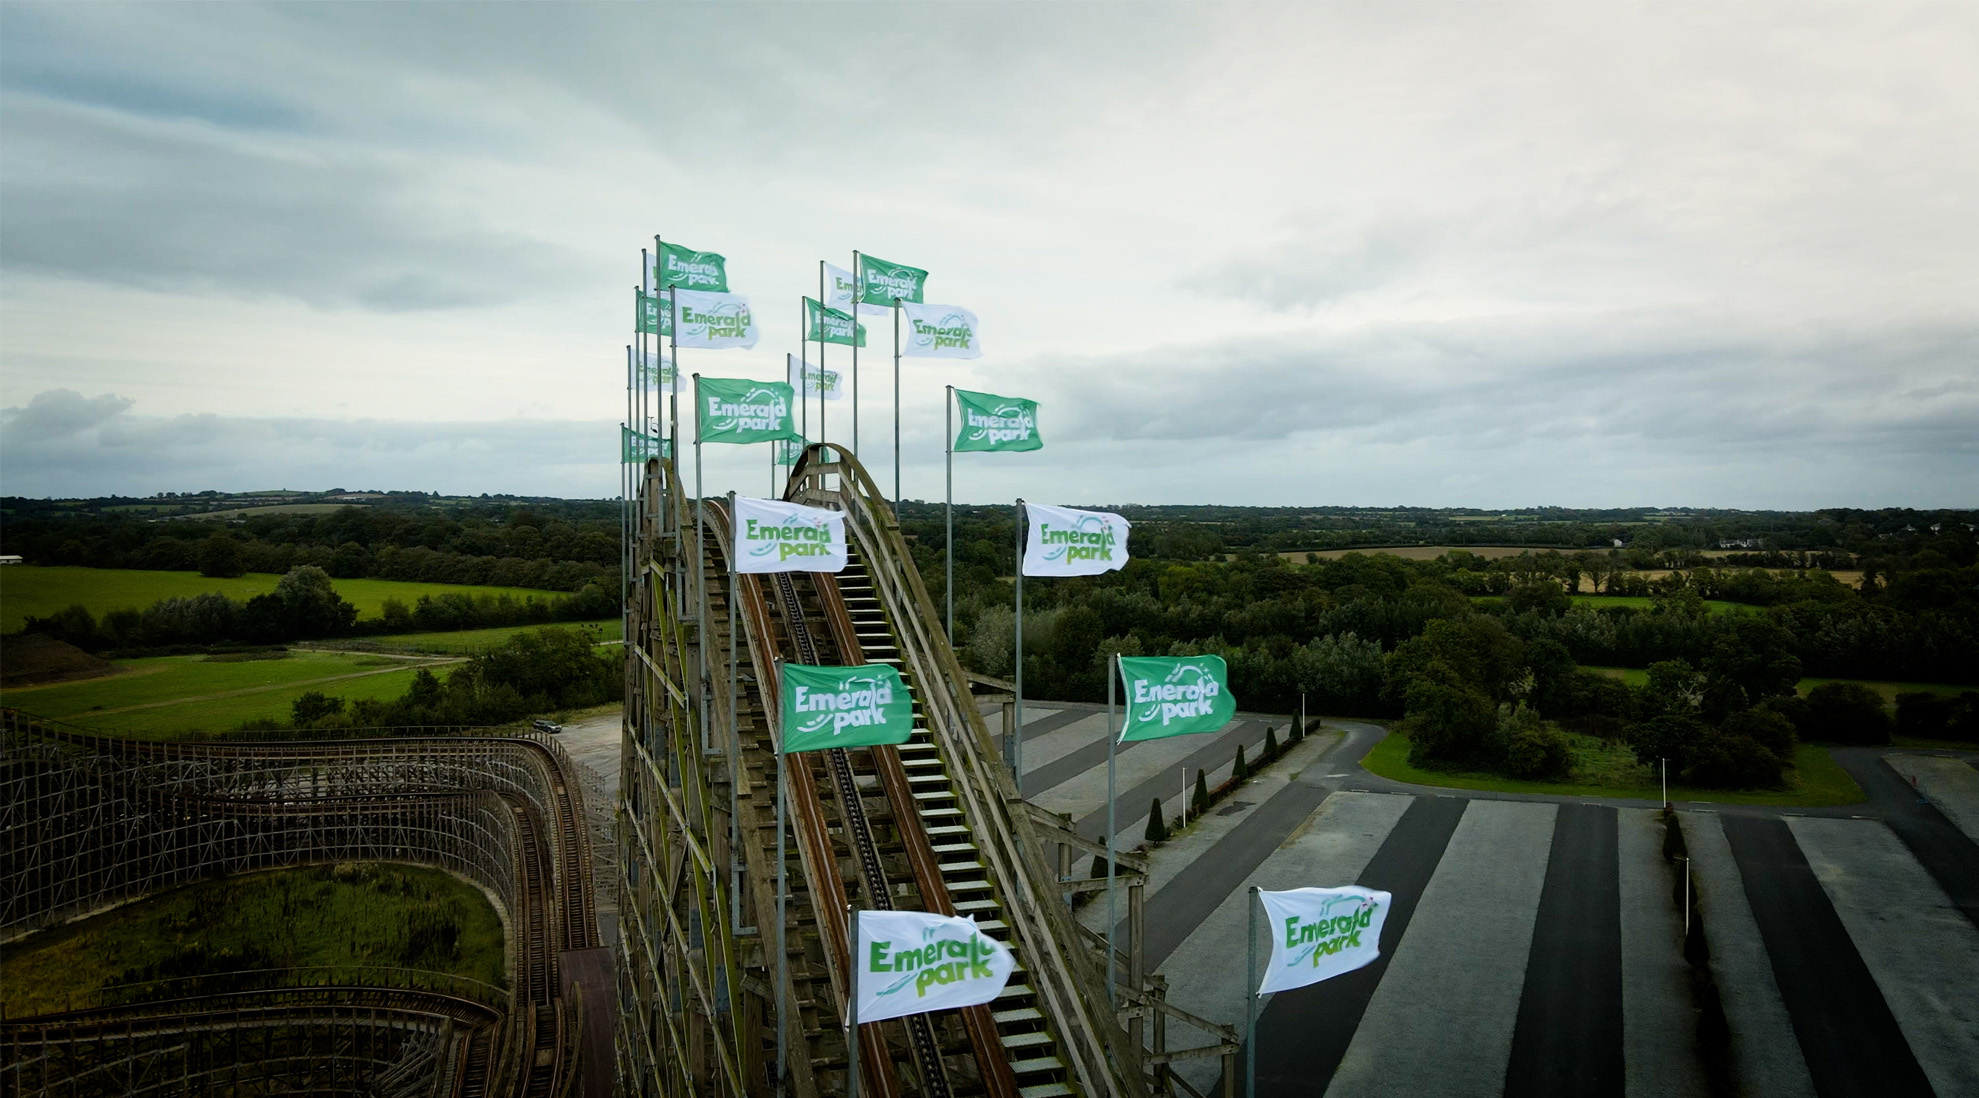 top of emerald park rollercoaster